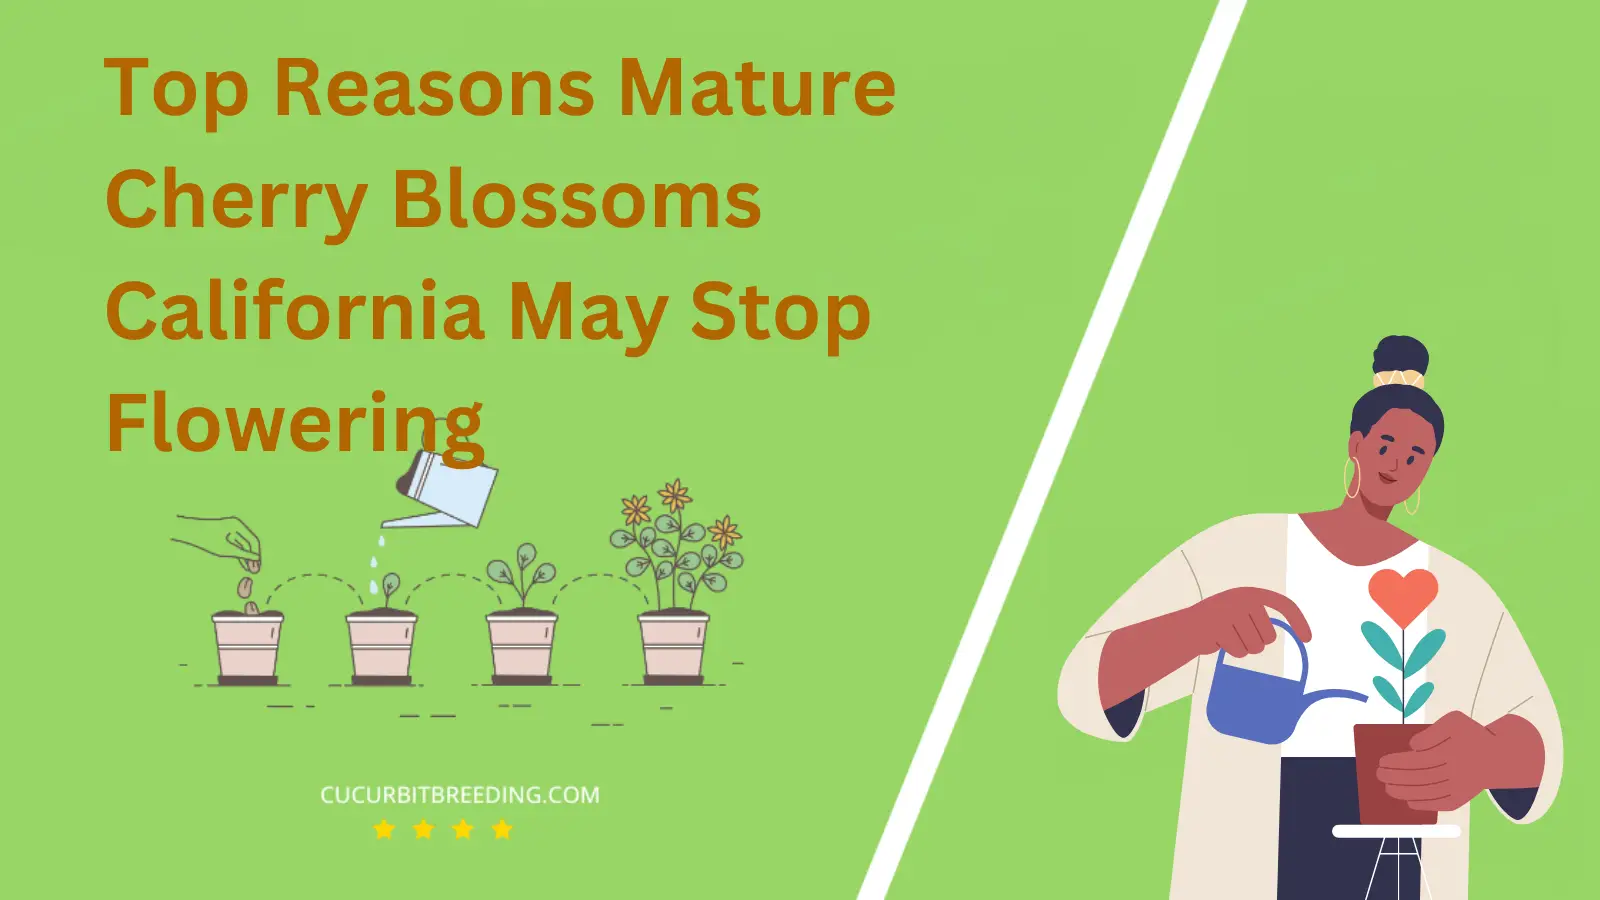 Top Reasons Mature Cherry Blossoms California May Stop Flowering